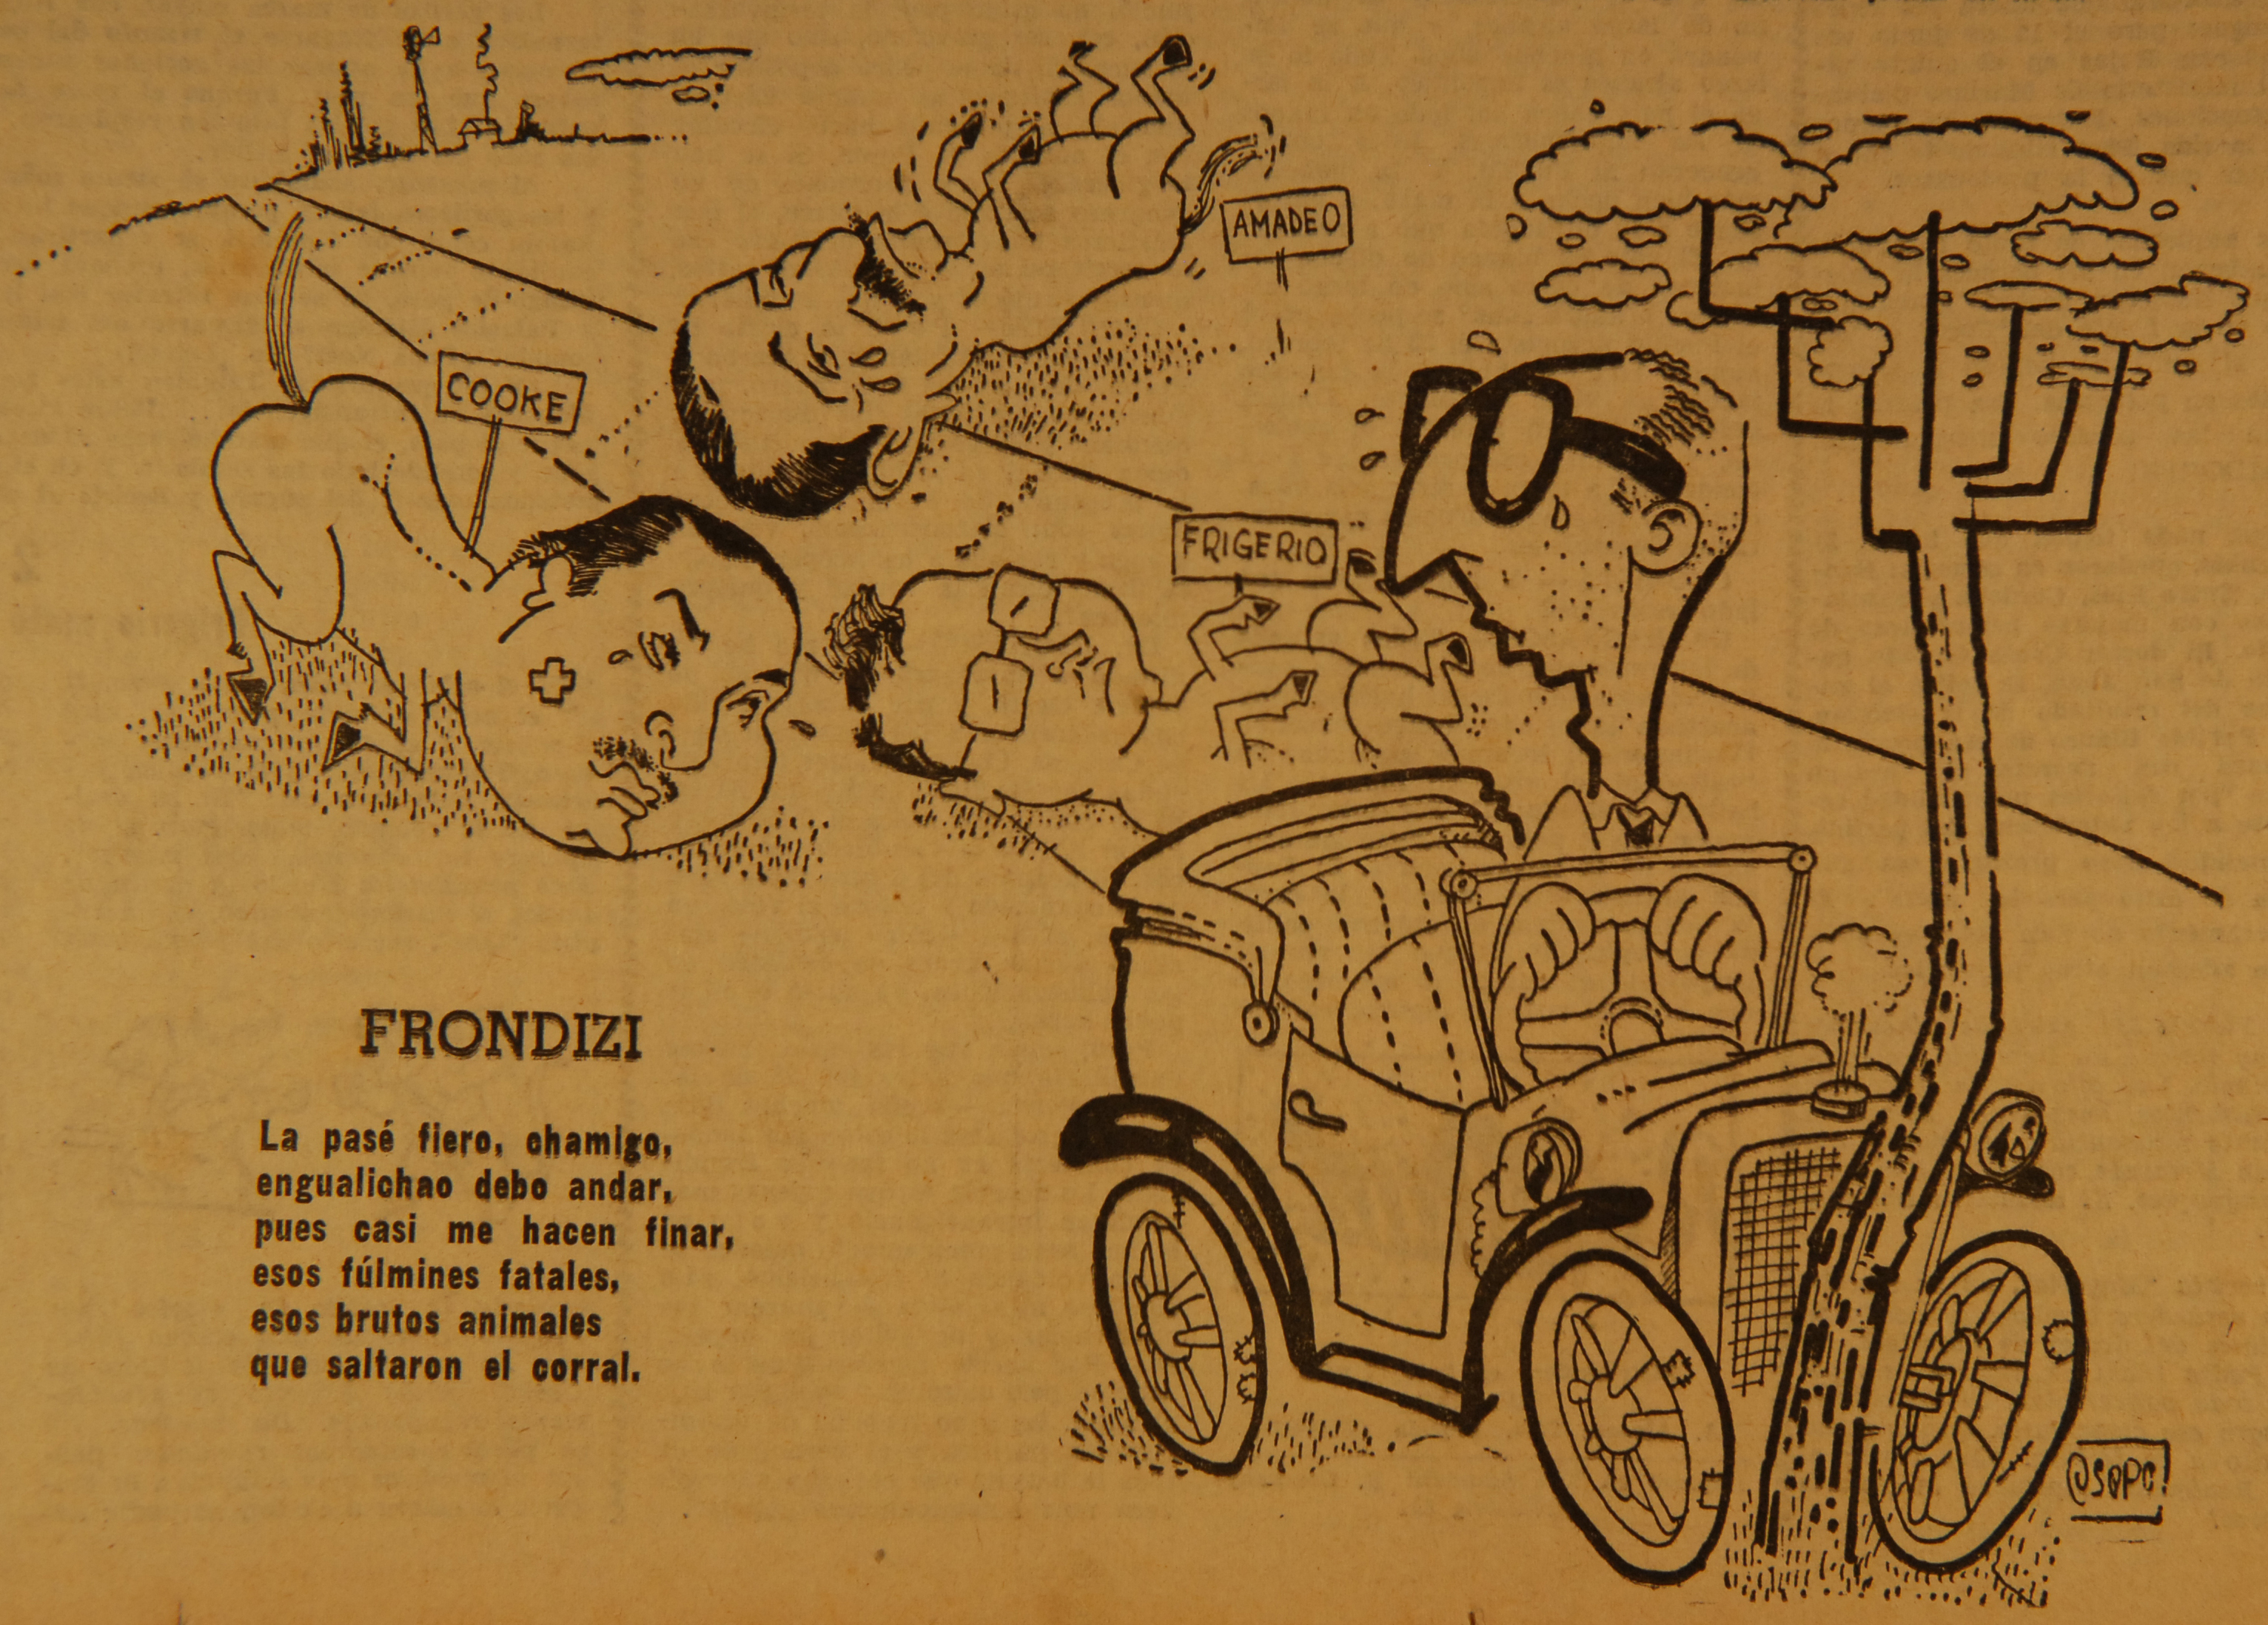 Caricatura Arturo Frondizi  maneja auto, Cooke, Frigerio y Amadeo